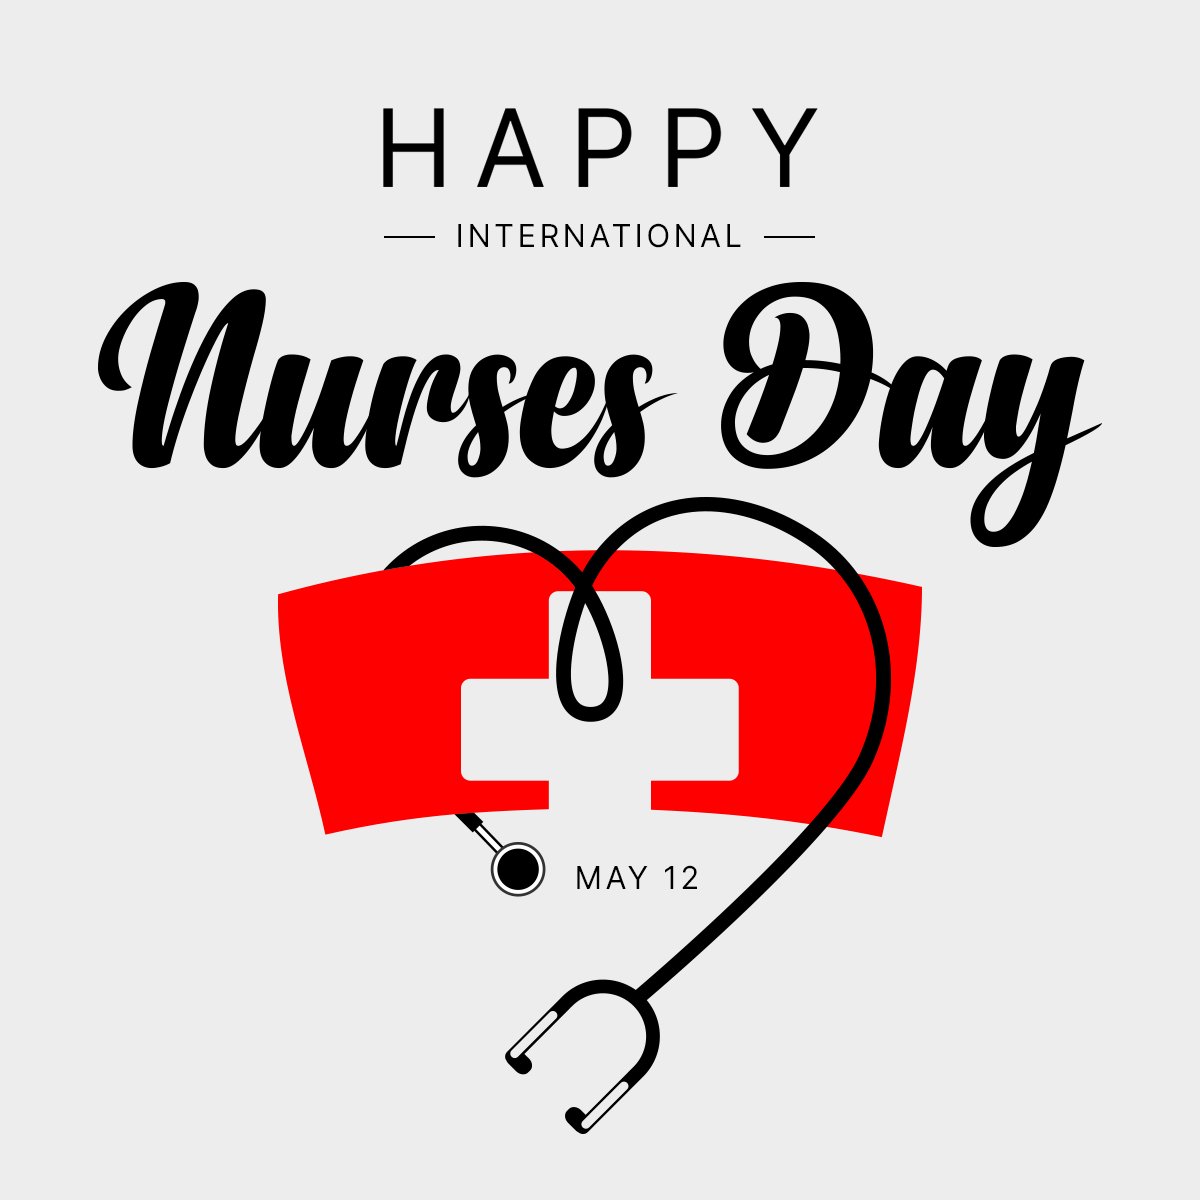 Happy International Nurses Day to all the amazing nurses who make a difference in the world every day! 🌎 🙌🏥👩‍⚕️ #InternationalNursesDay #NurseHeroes #HealthcareChampions 
.
.
.
#RicomaInternational #Embroidery #EmbroideryMachine #MachineEmbroidery #Ricoma